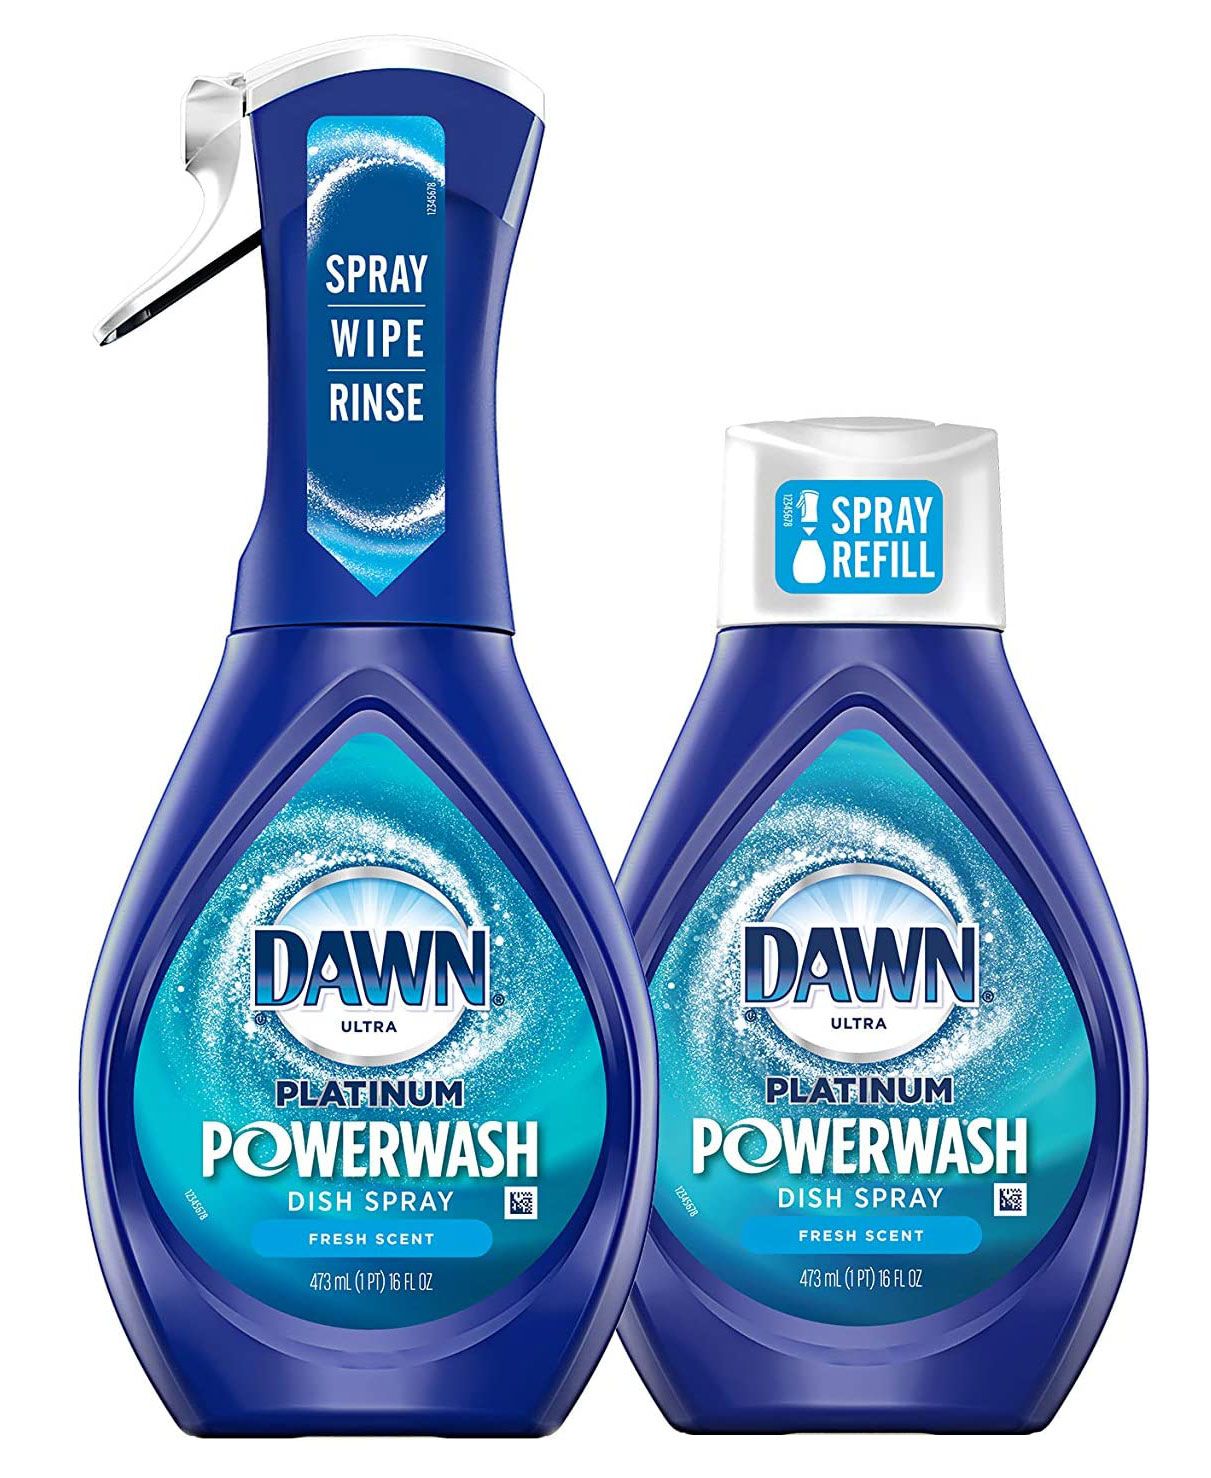 Ең ақылды заттар 2020 - Dawn Platinum Powerwash